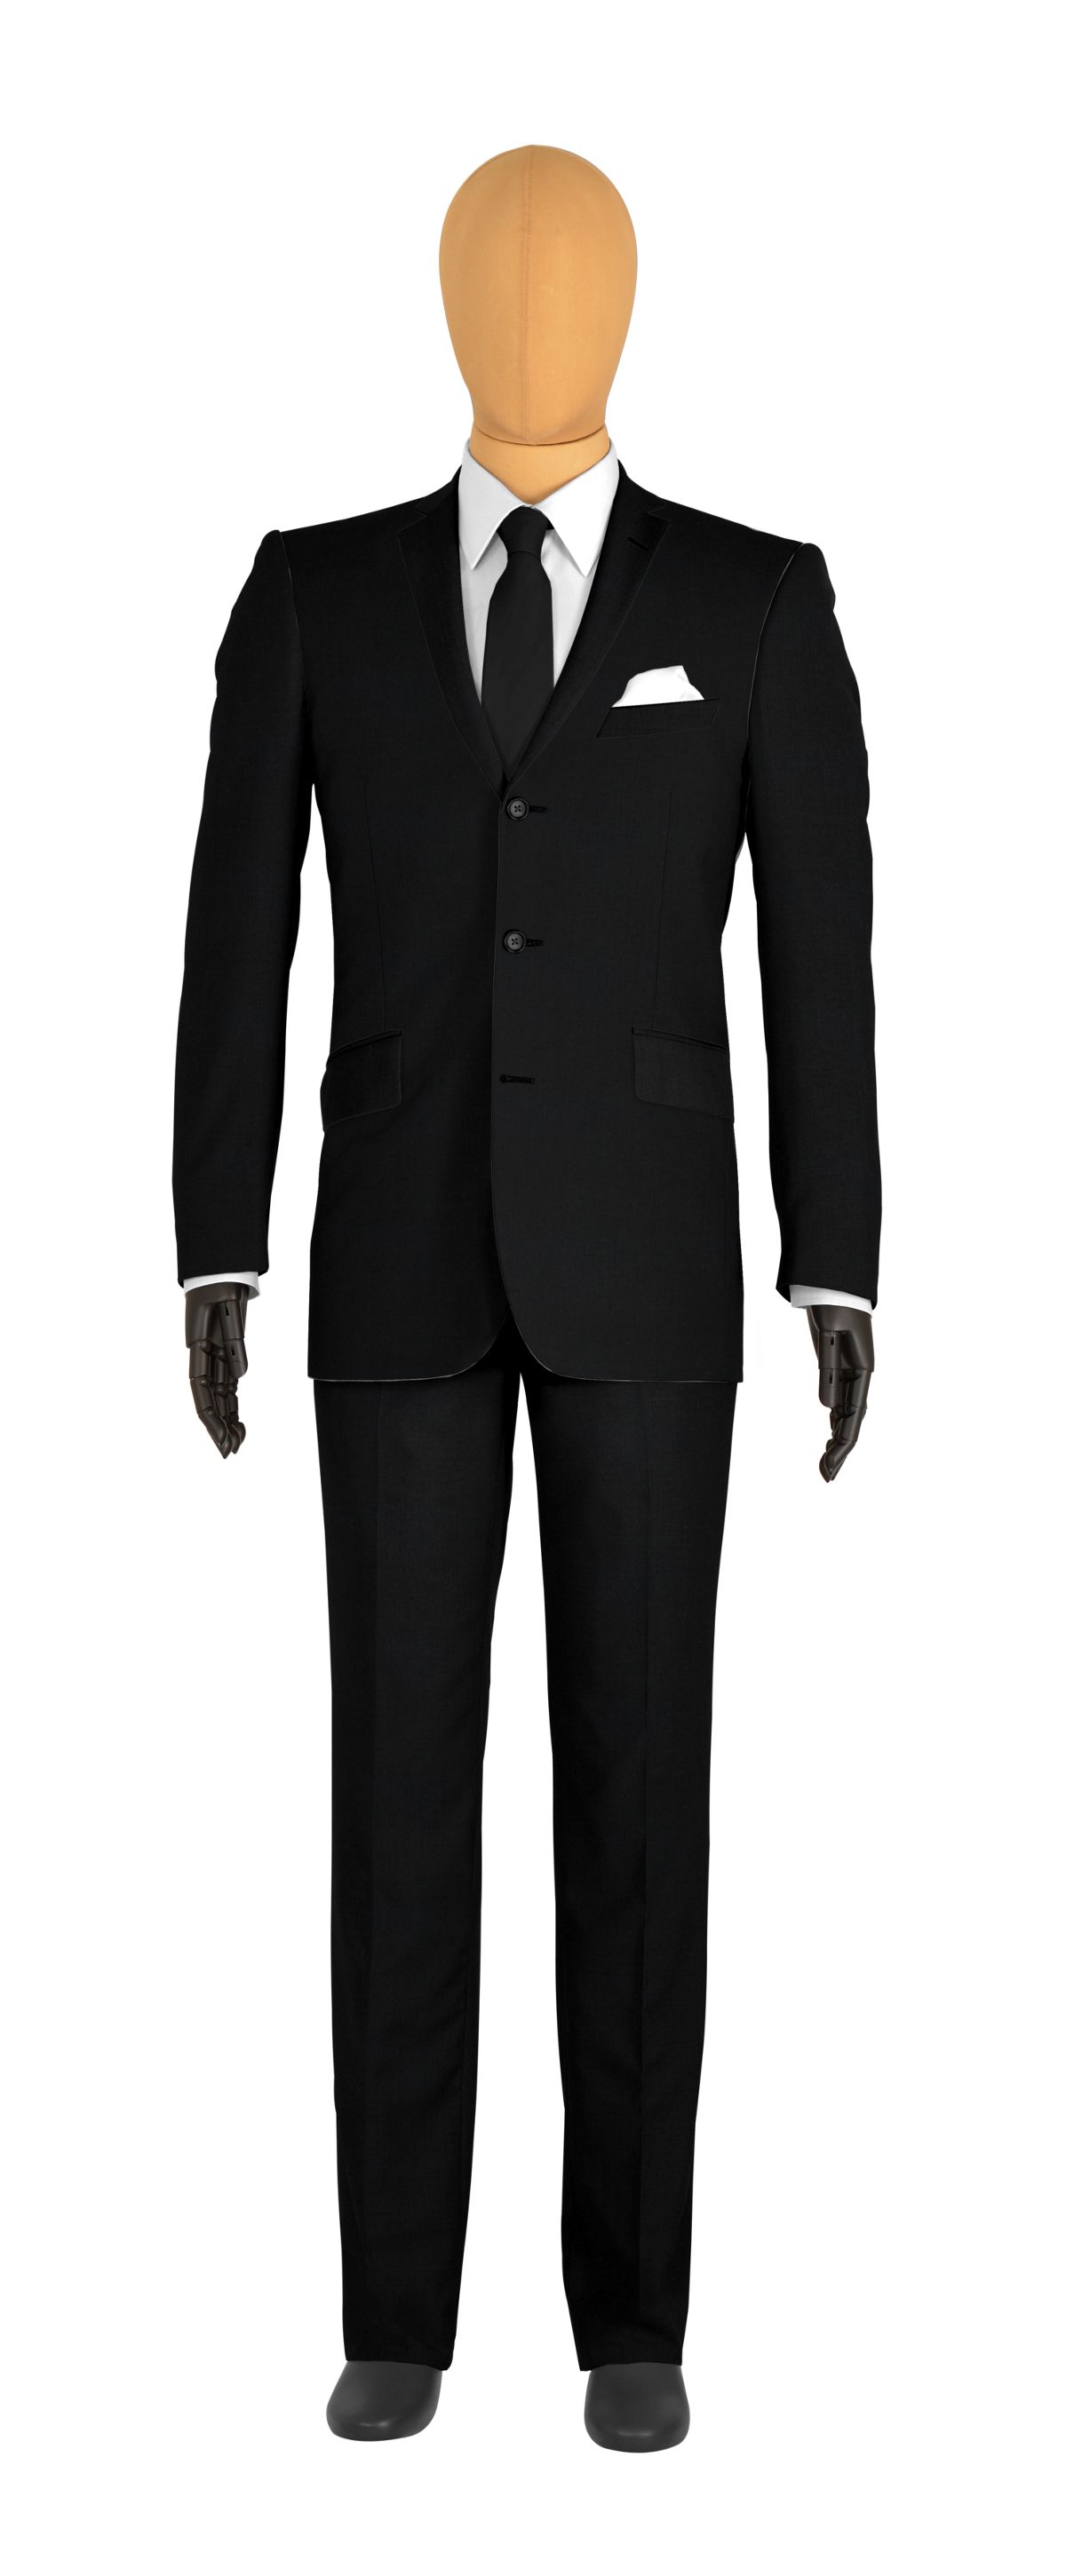 costume 3 boutons noir doublure grise